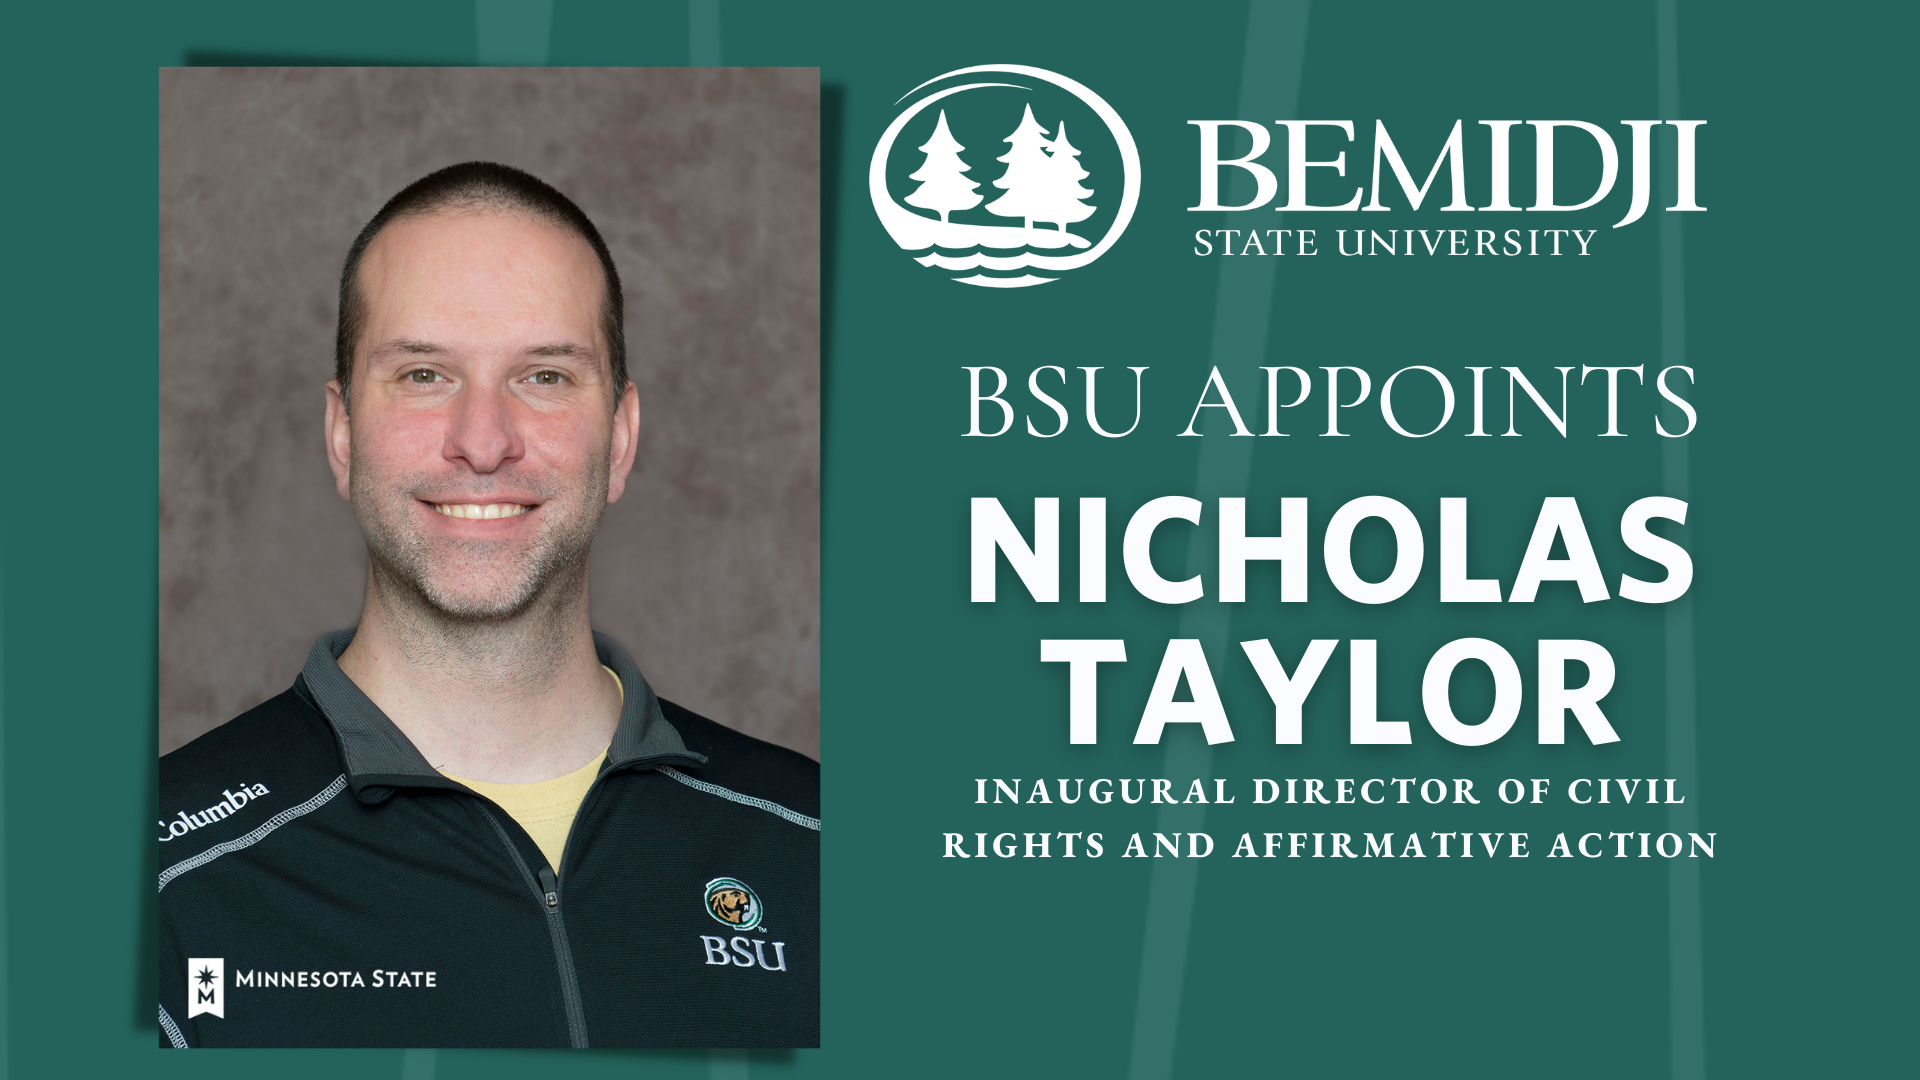 Nicholas Taylor, inaugural director of civil rights and affirmative action at Bemidji State. 